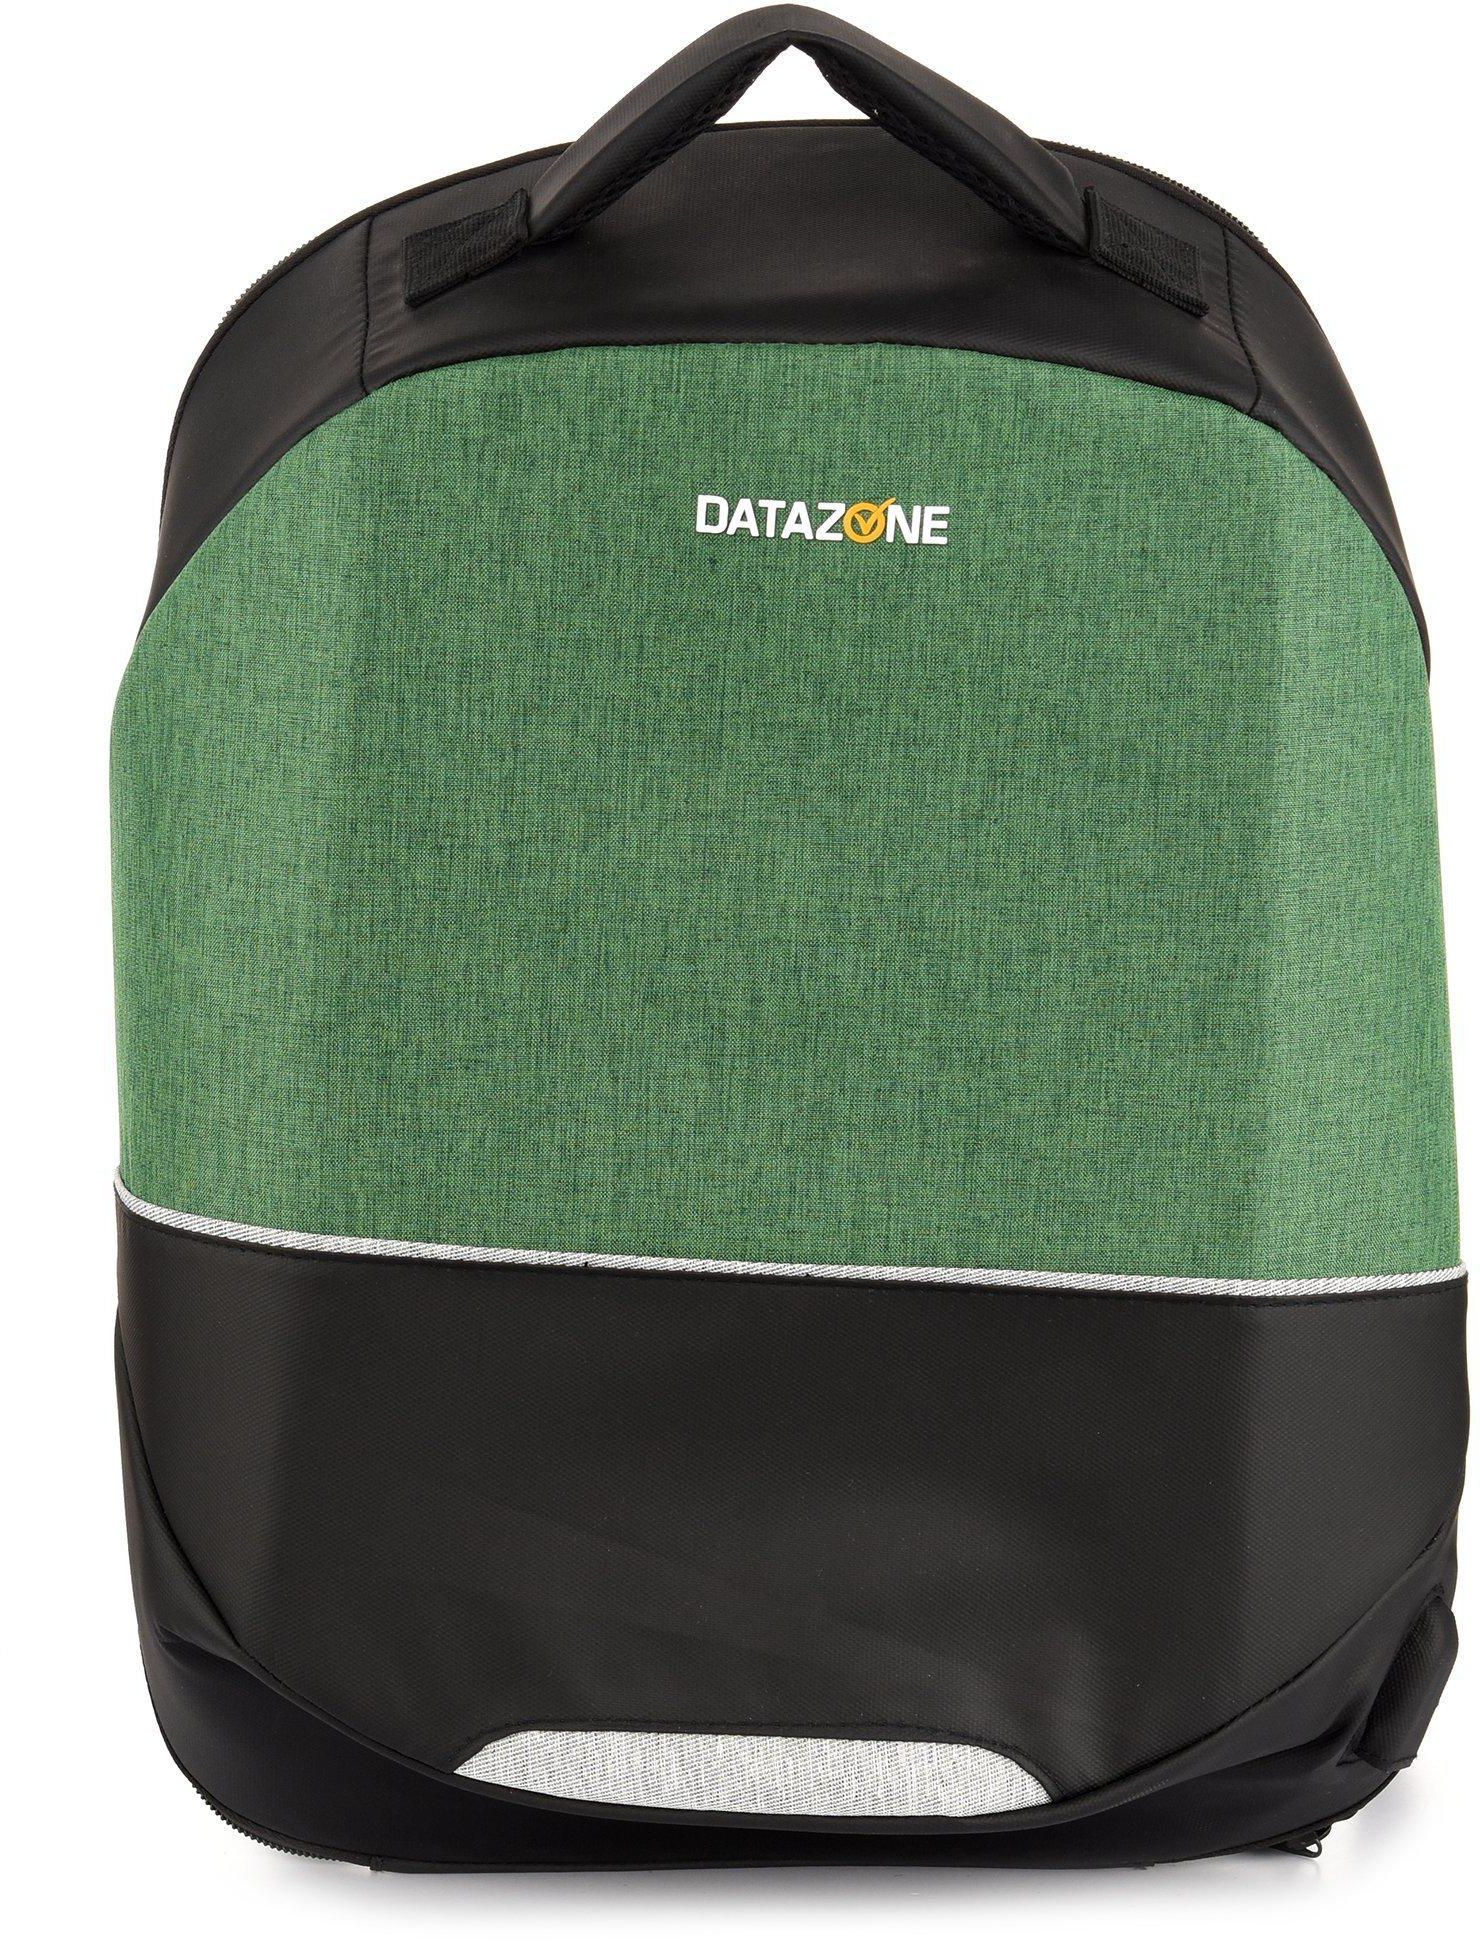 DATAZONE backpack, 15.6 Inch, waterproof laptop backpack, USB, Green